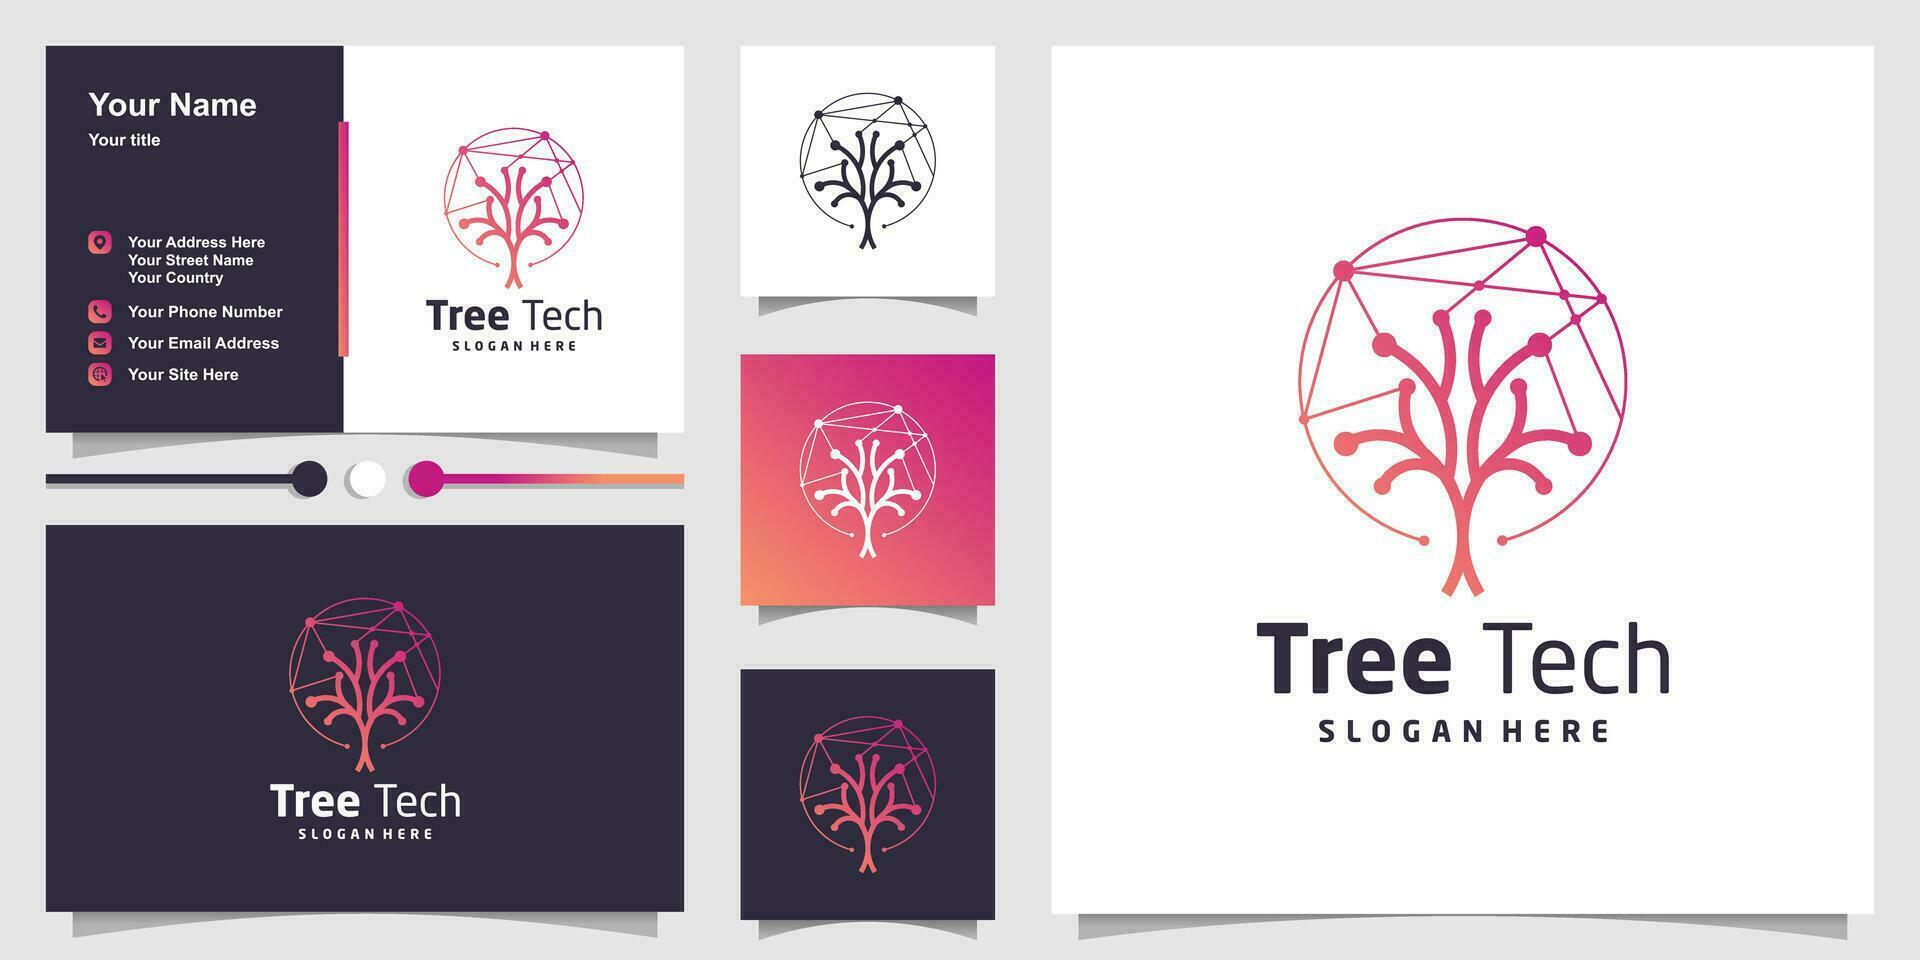 Tree tech design element vector icon with creative concept idea